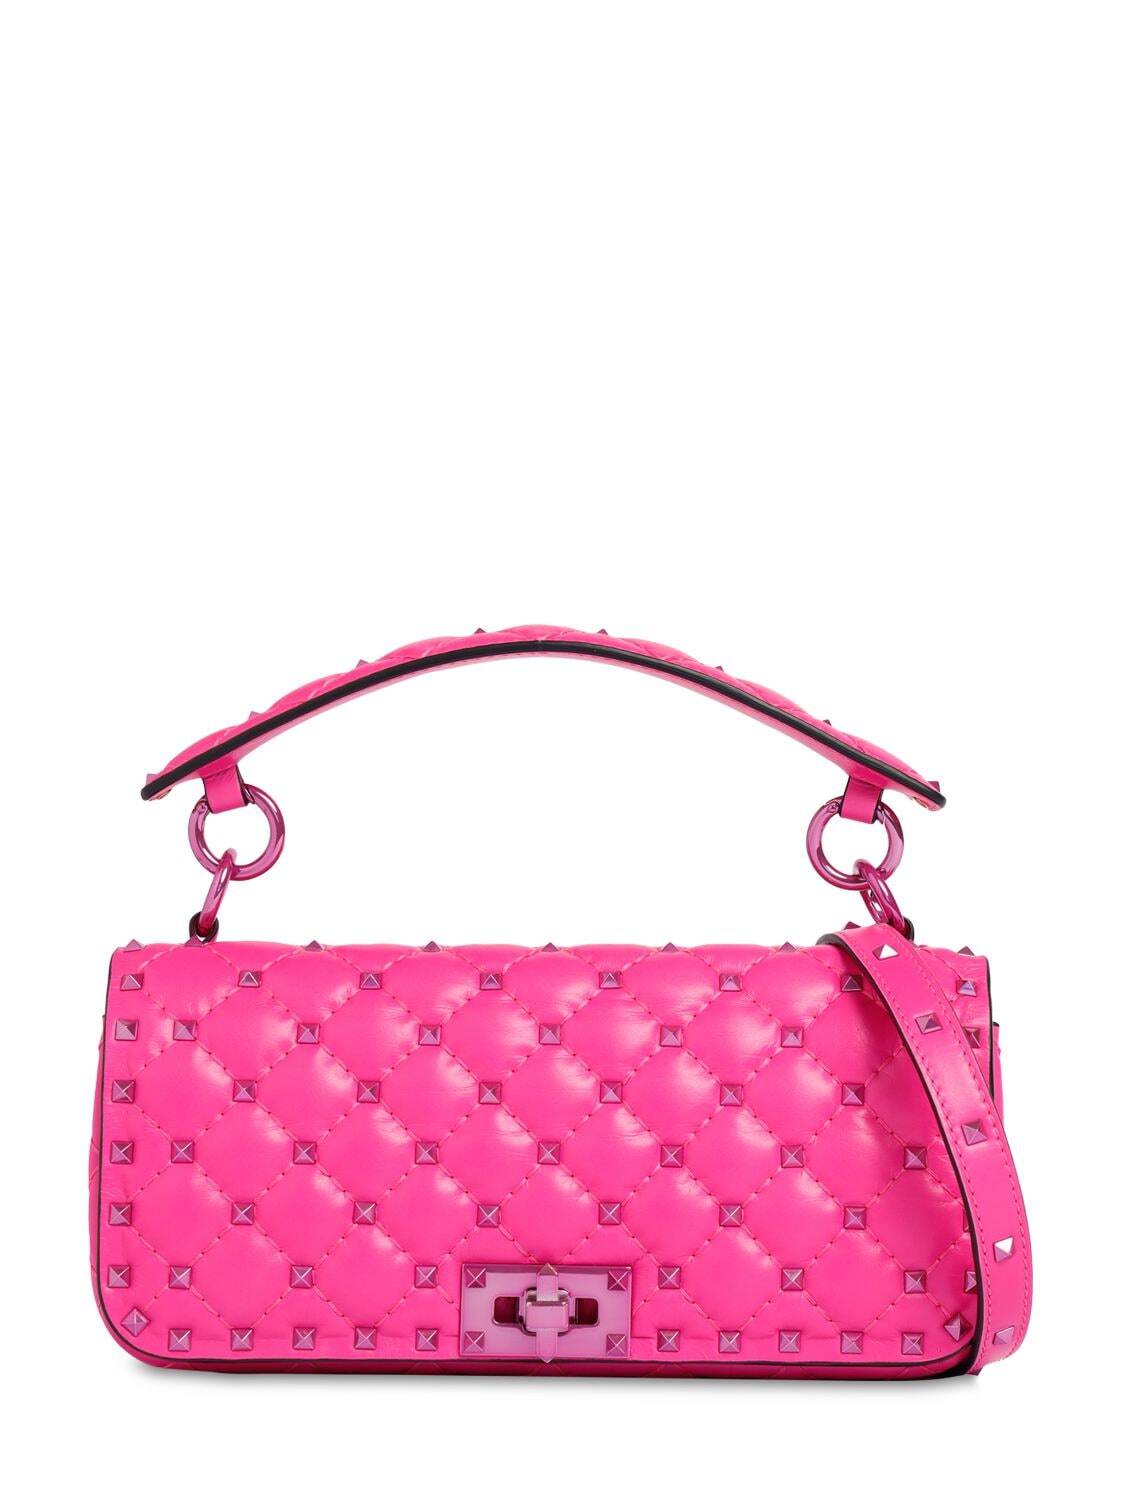 VALENTINO GARAVANI Small Rockstud Leather Shoulder Bag in pink